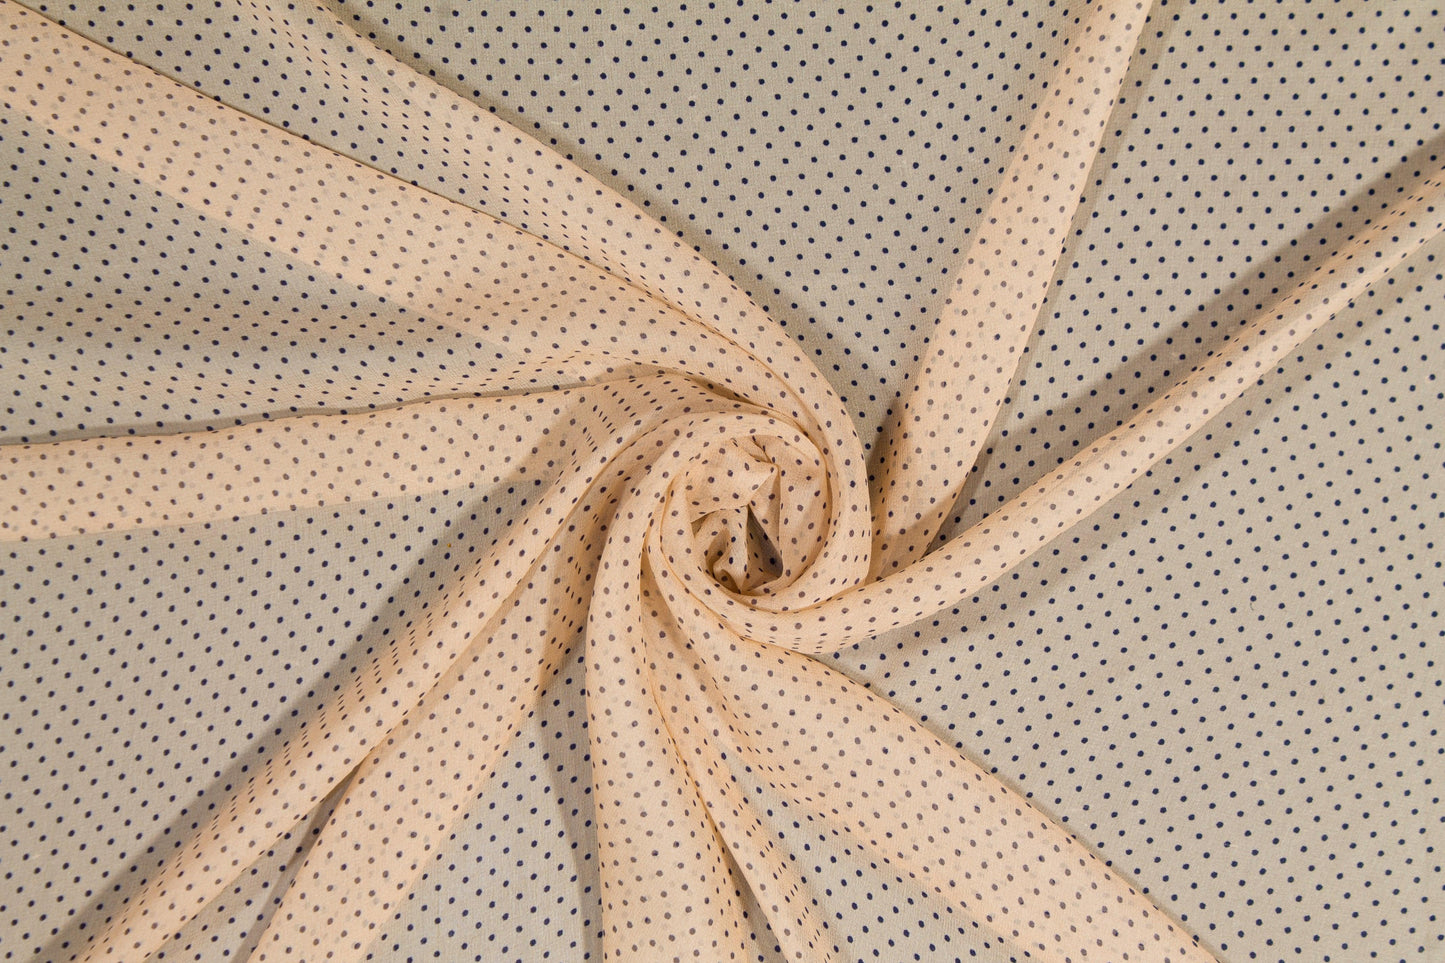 Polka Dot Silk Chiffon - Beige and Navy - Prime Fabrics